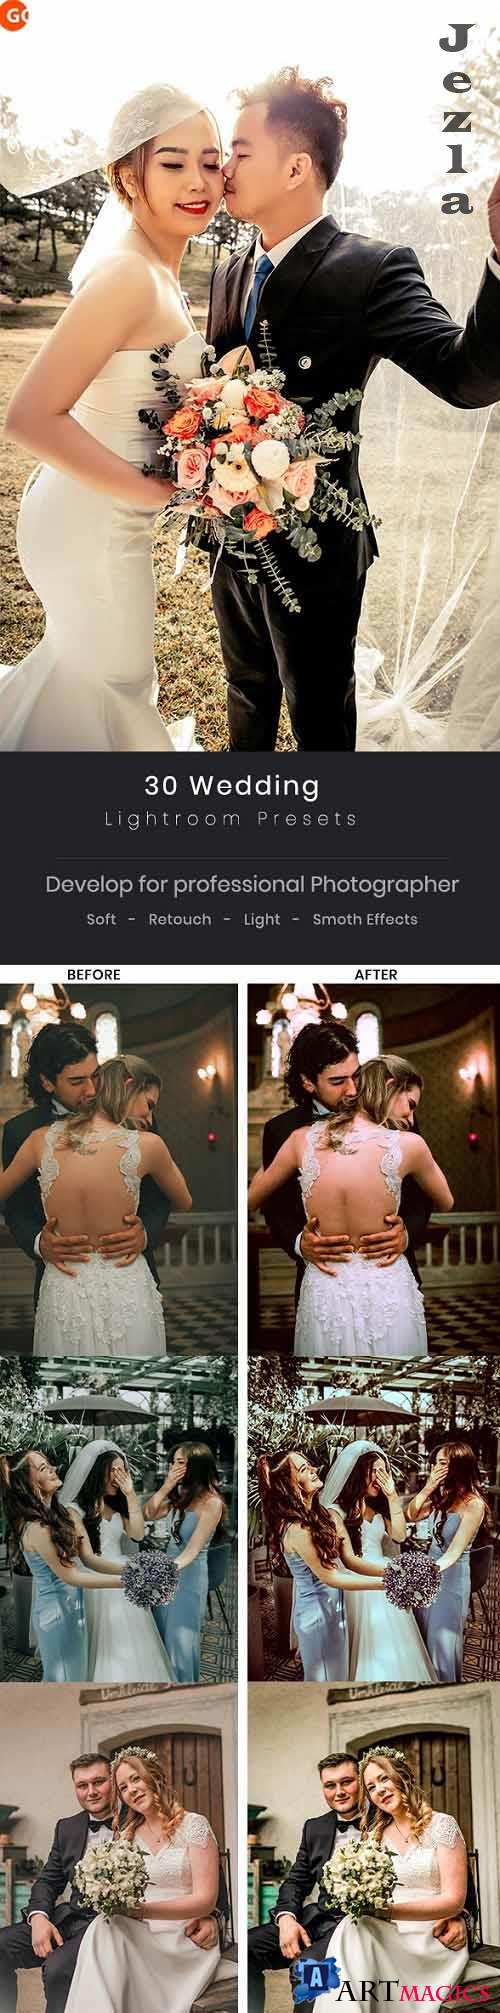 30 Wedding Lightroom Presets - 29962252